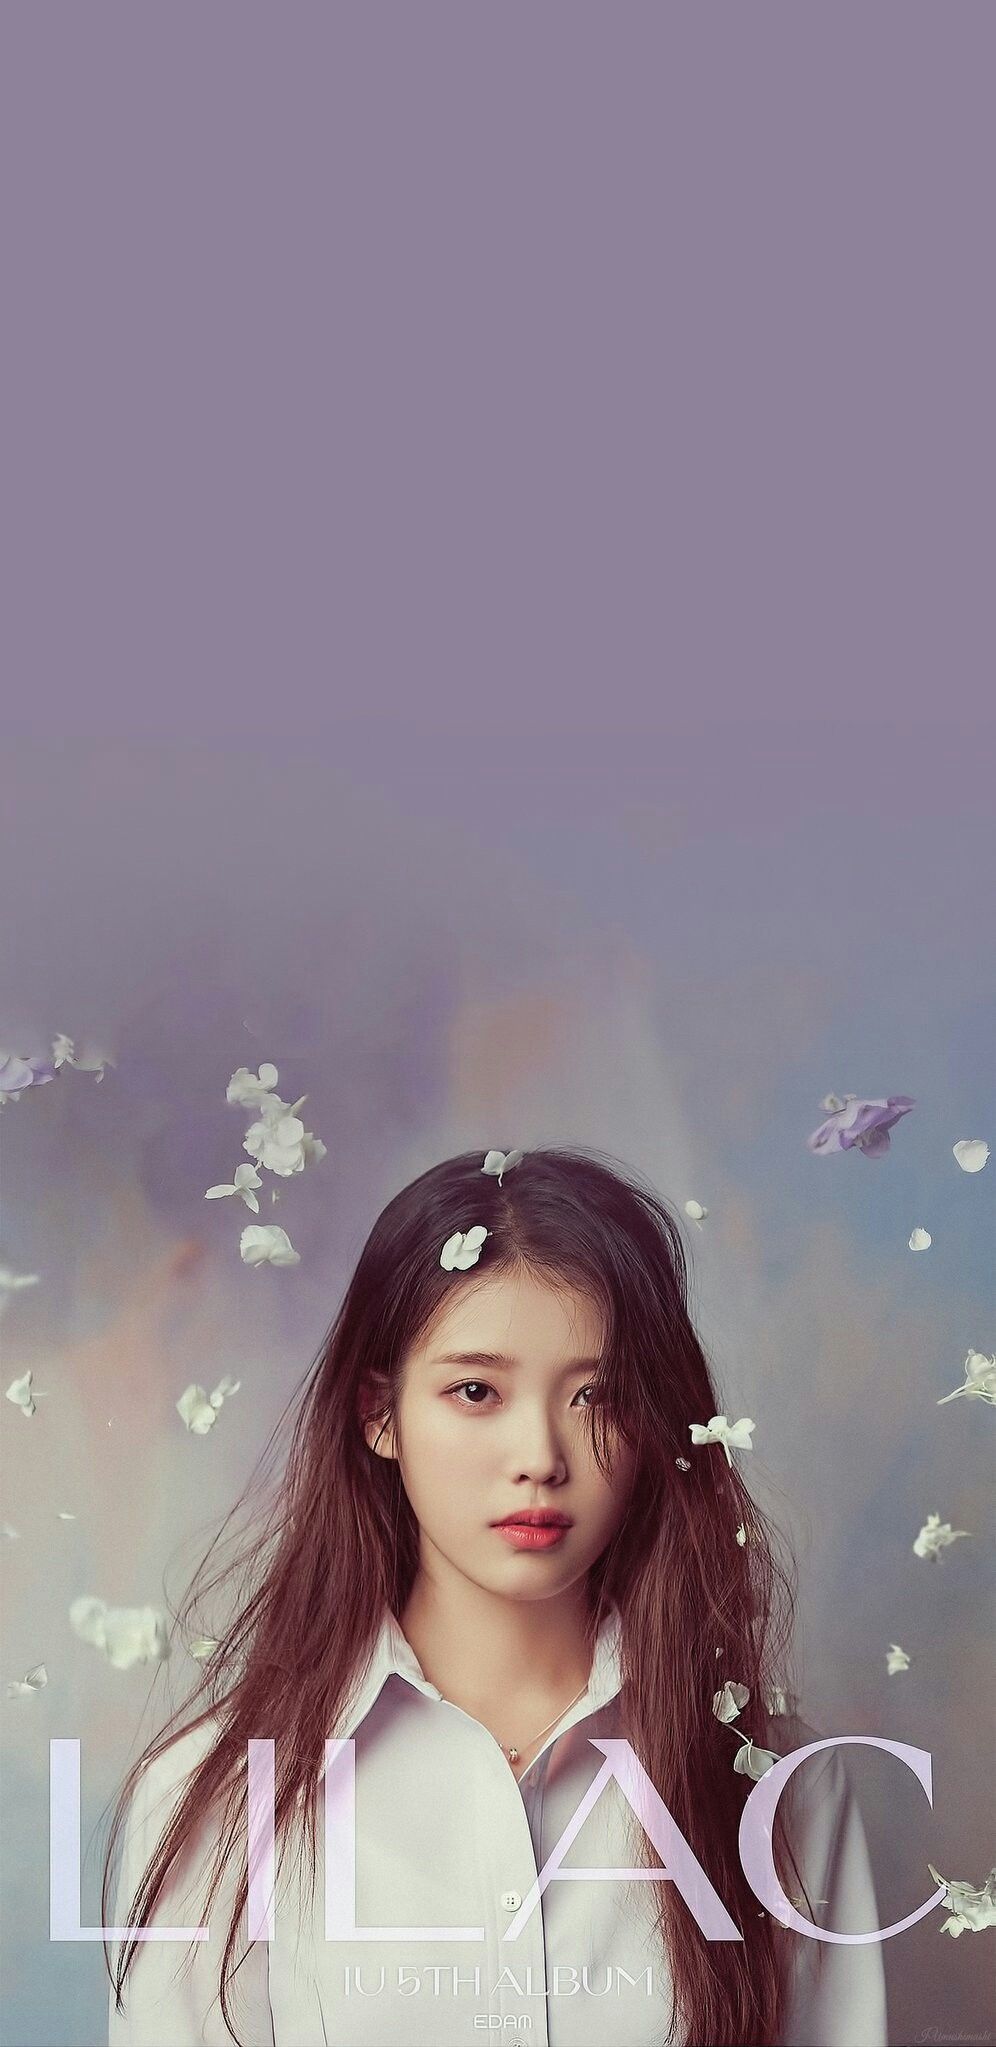 IU wallpaper. Digital art girl, Korean actresses, Asian beauty girl